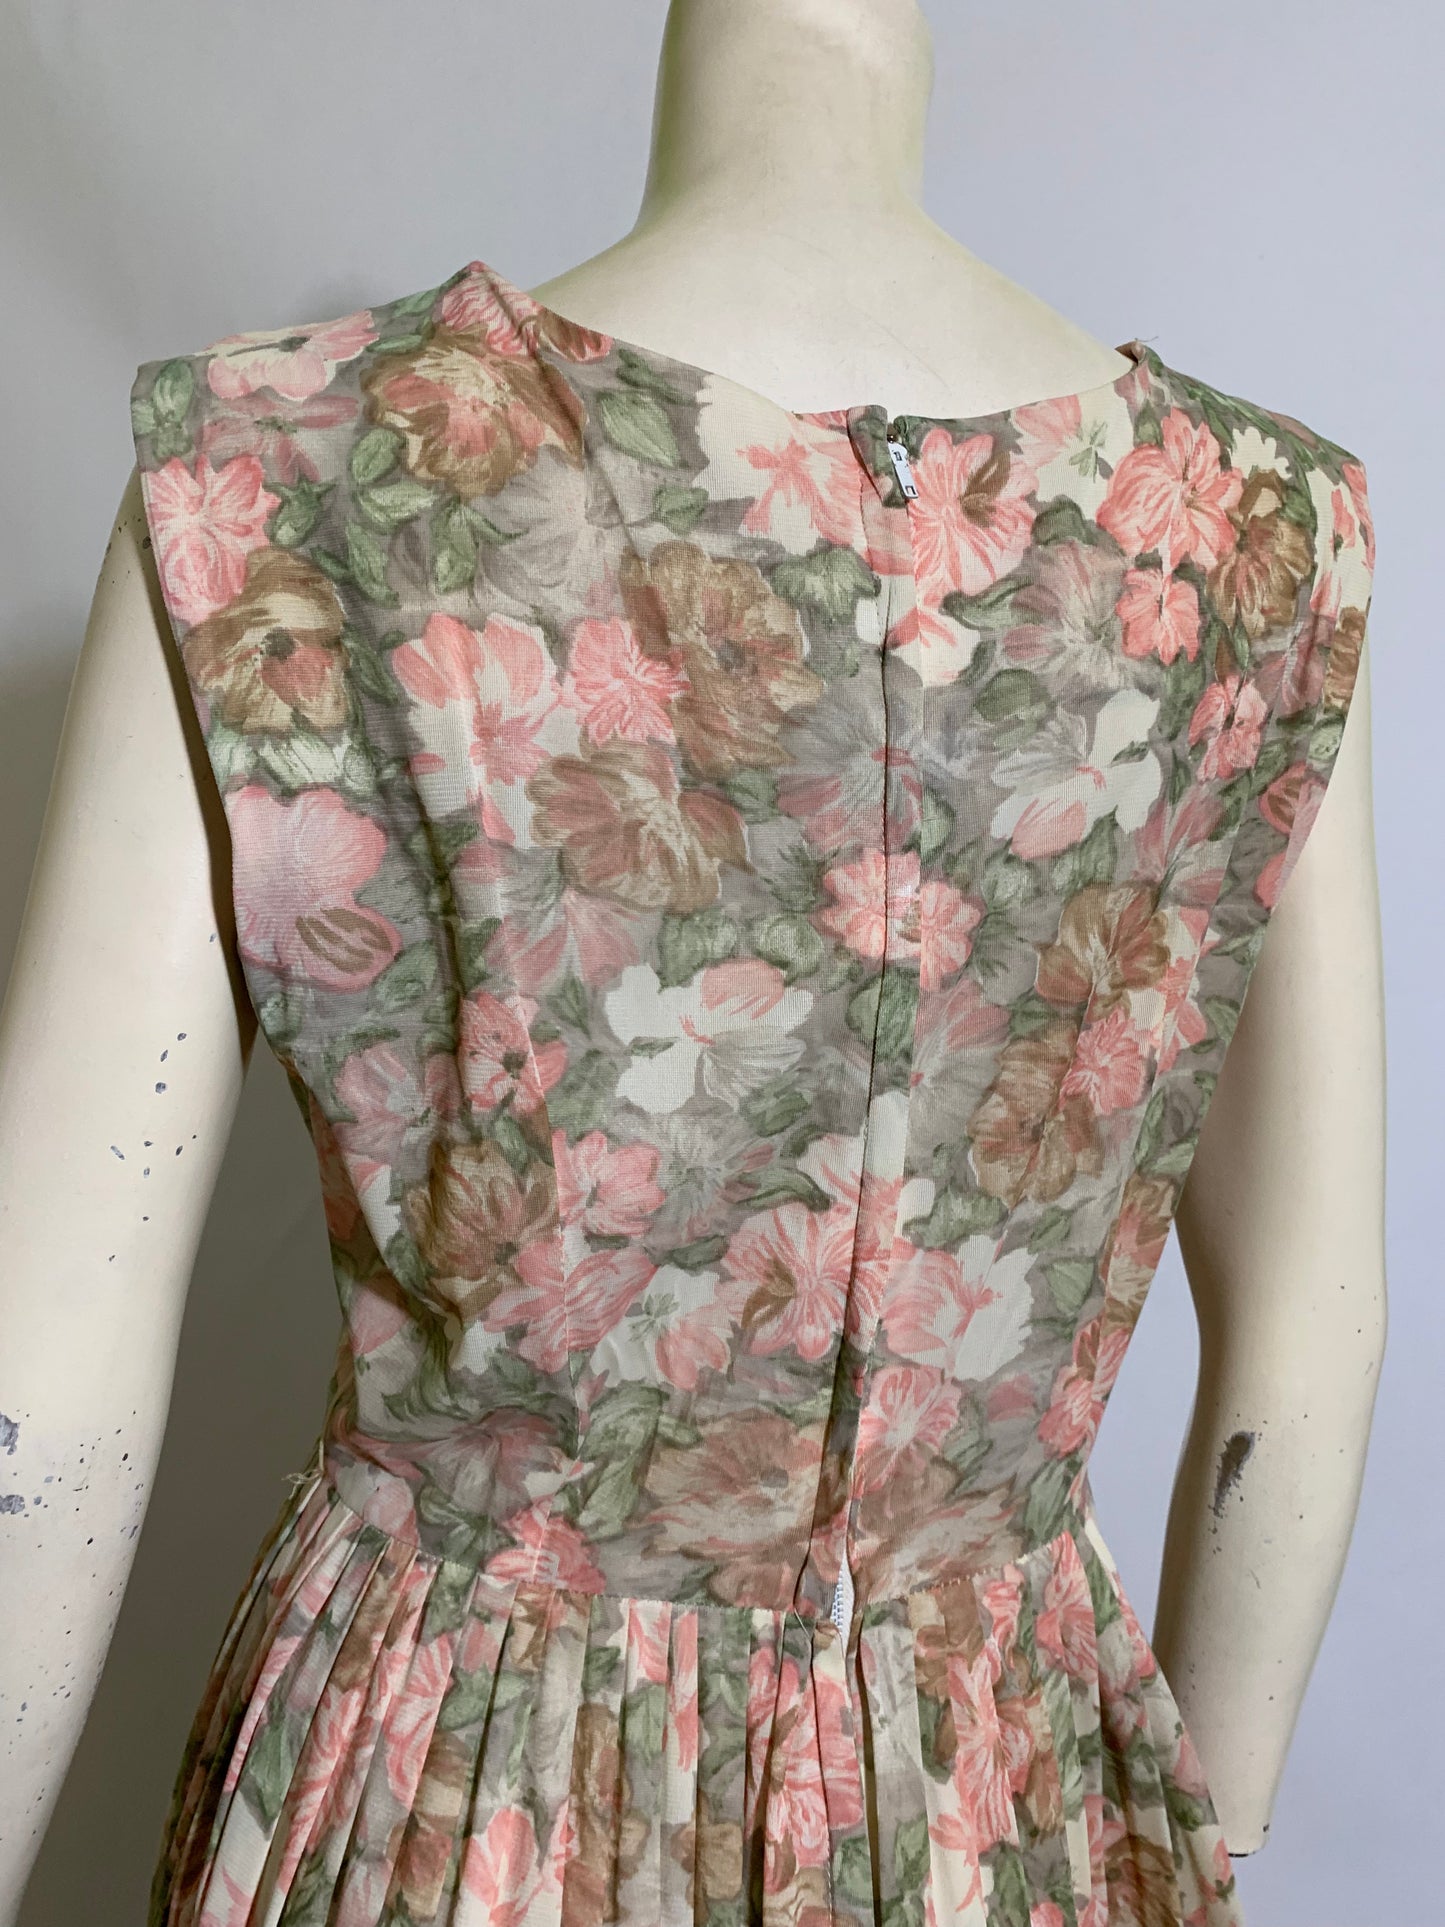 Softest Peach Floral Print Jersey Nylon Pleated Skirt Dress circa 1960s